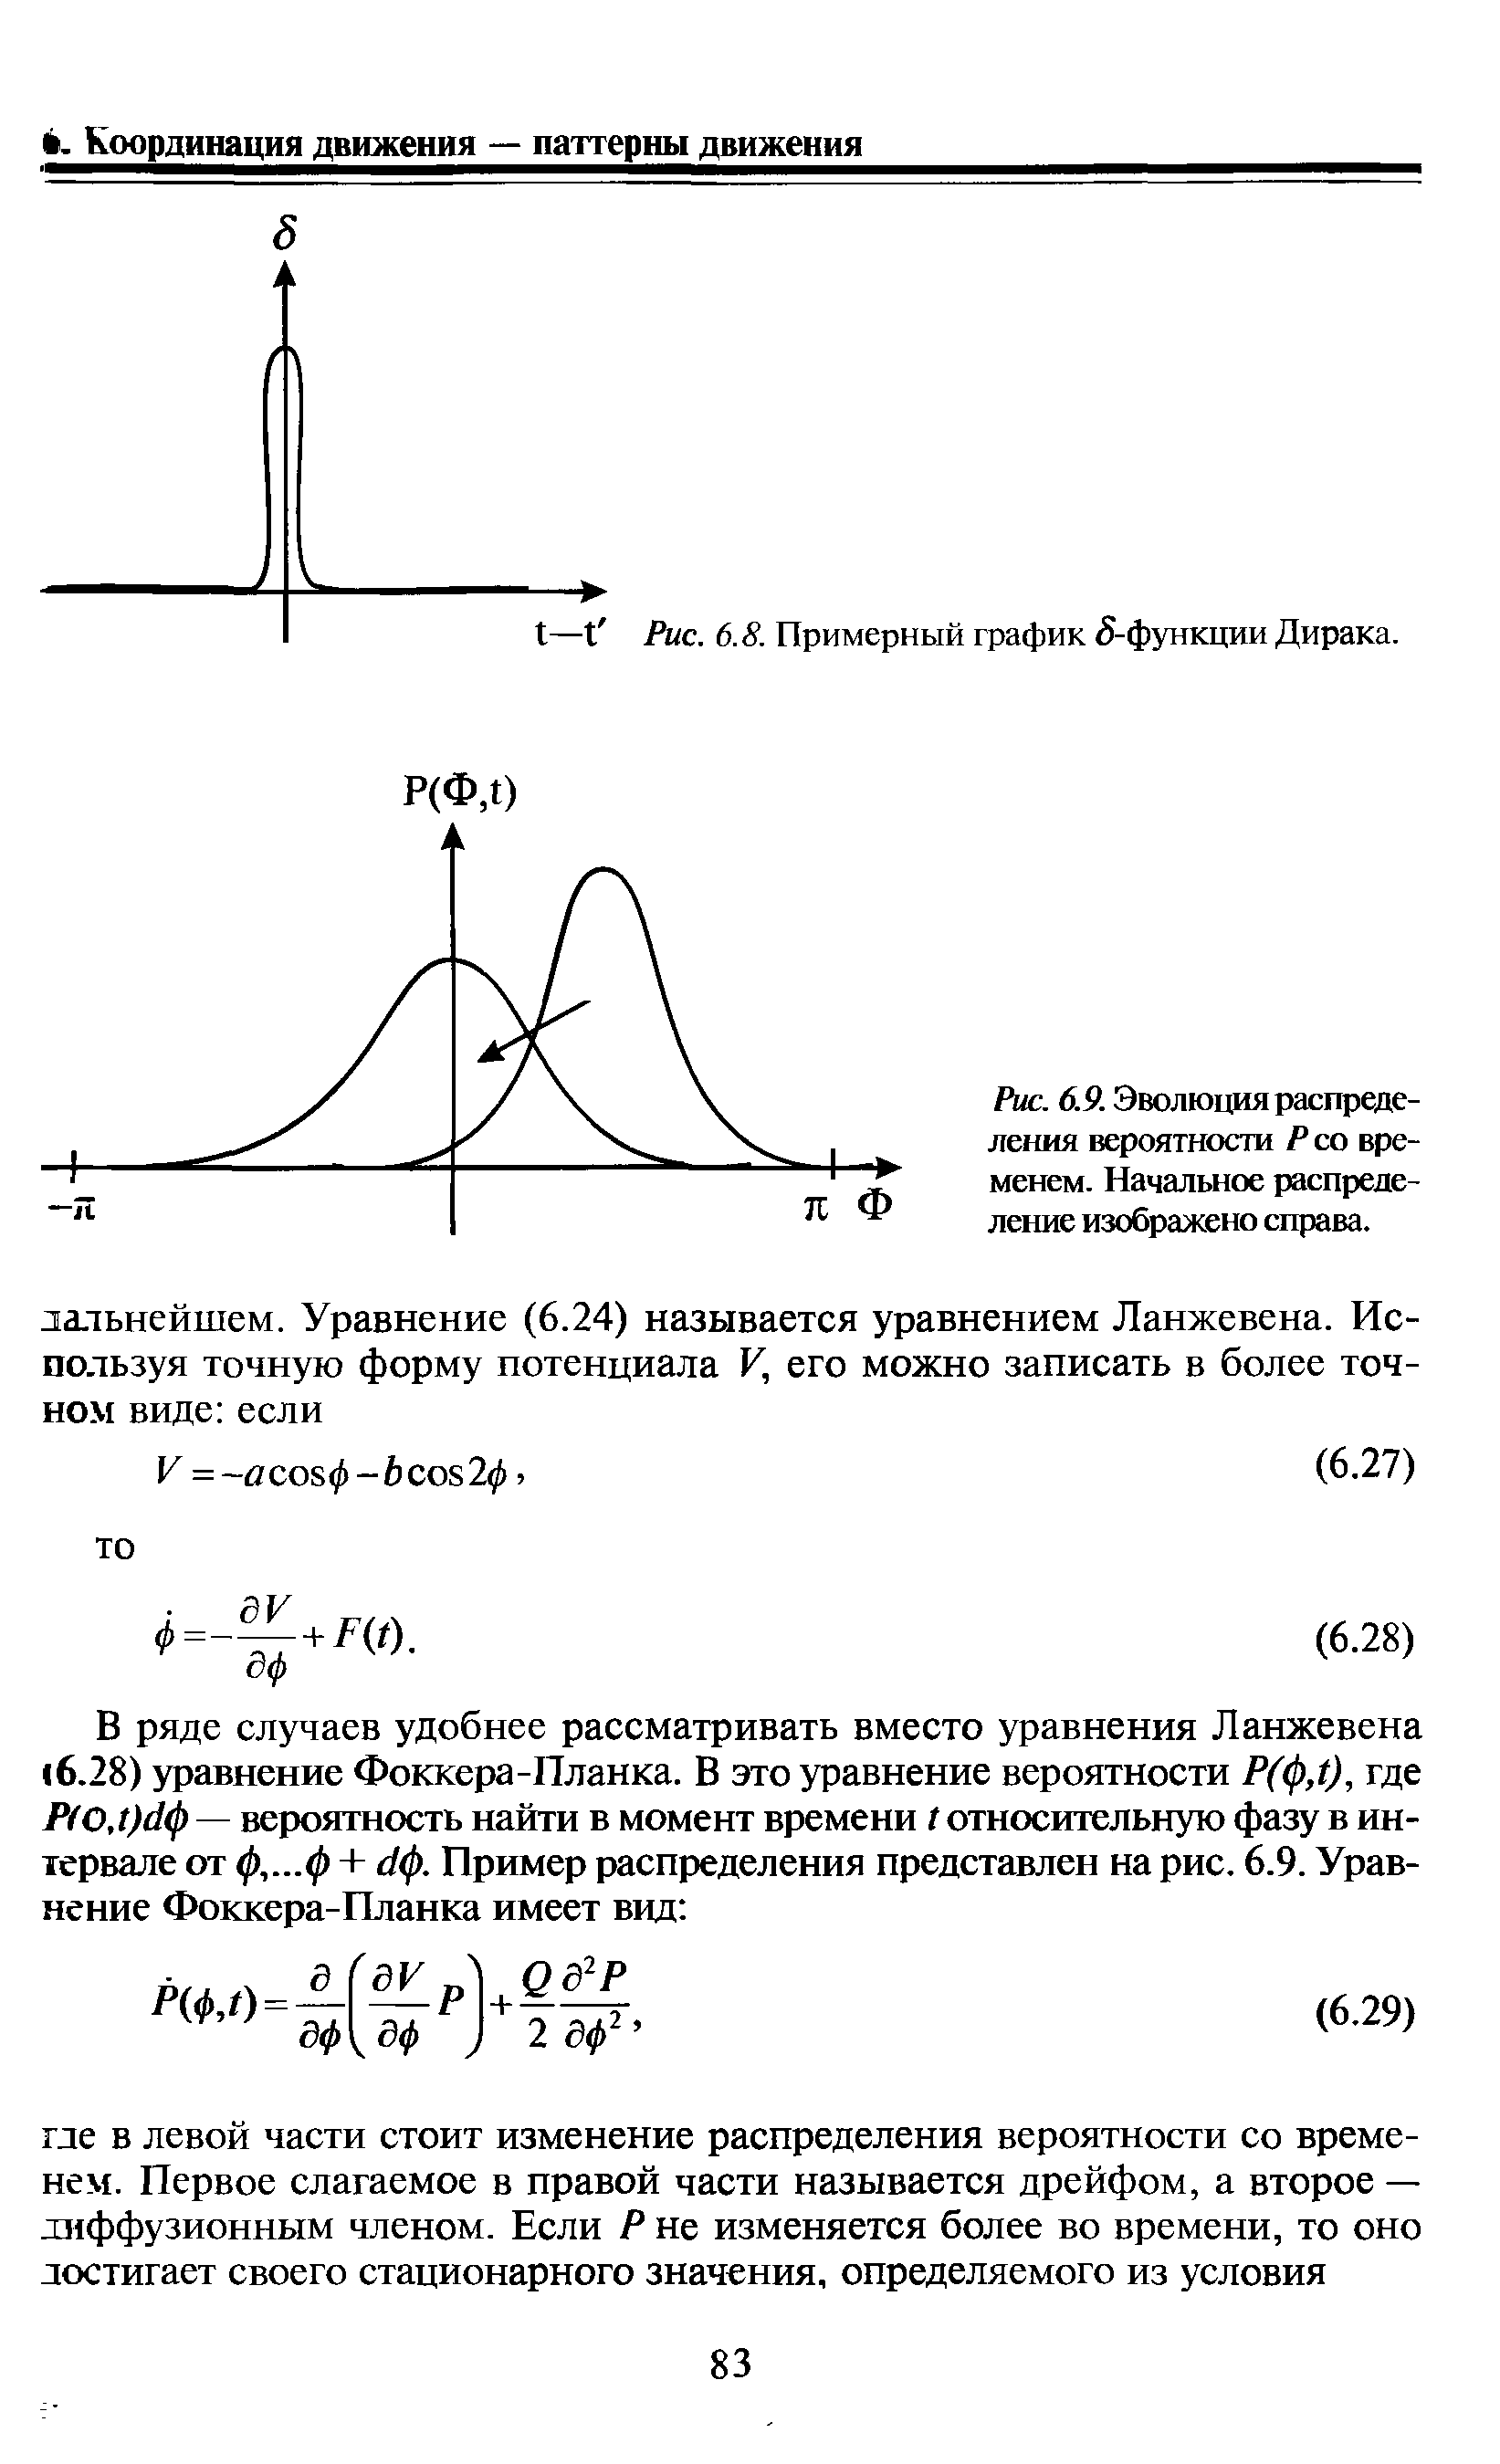 Рис. 6.9. Эволюция распределения вероятности Р со временем. Начальное распределение изображено справа.